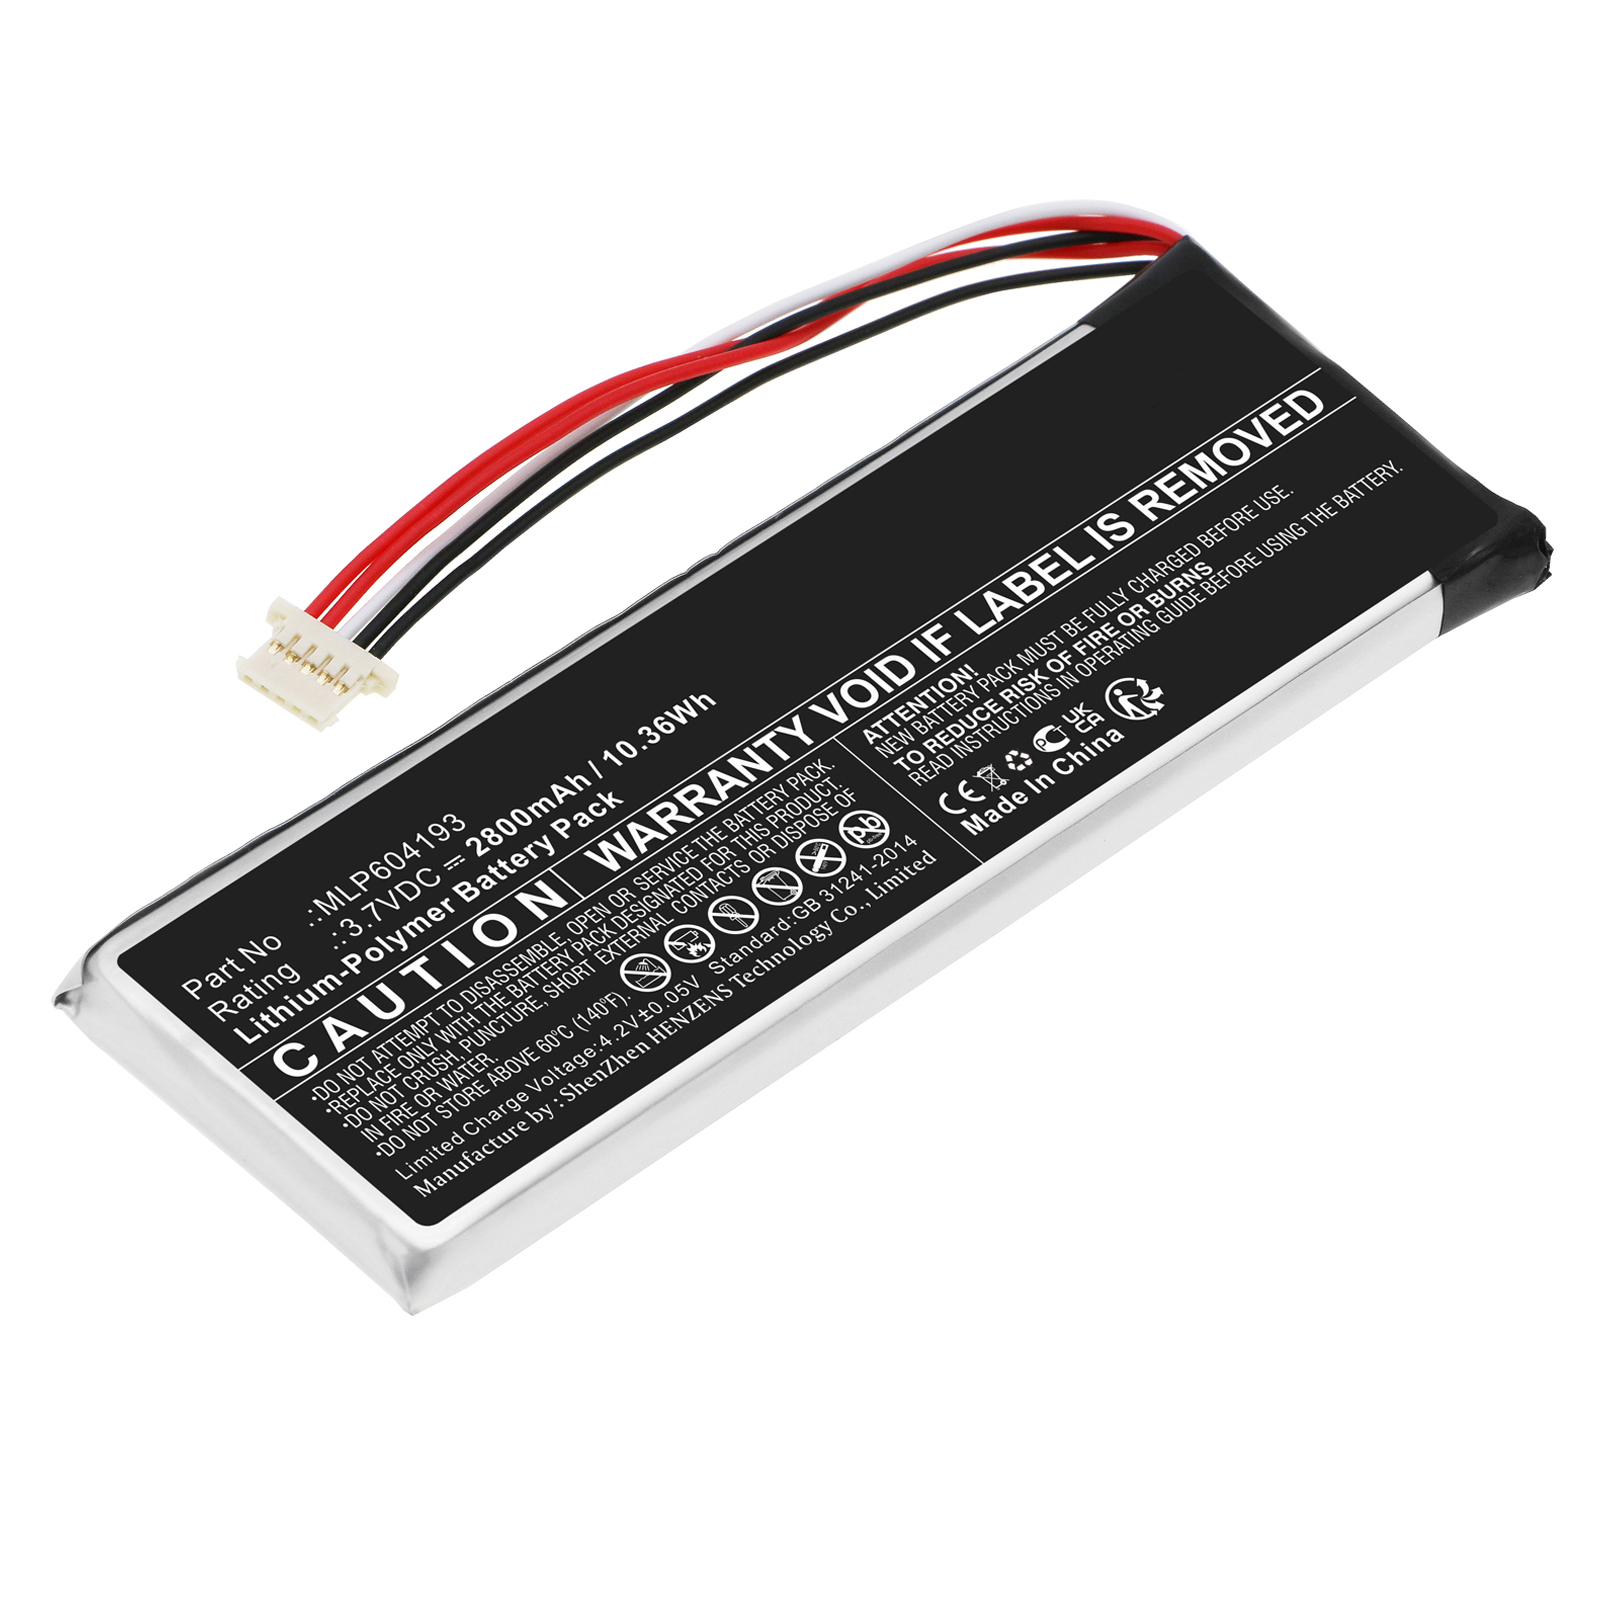 Synergy Digital Diagnostic Scanner Battery Compatible with Autel MLP604193 Diagnostic Scanner Battery (Li-Pol, 3.7V, 3000mAh)